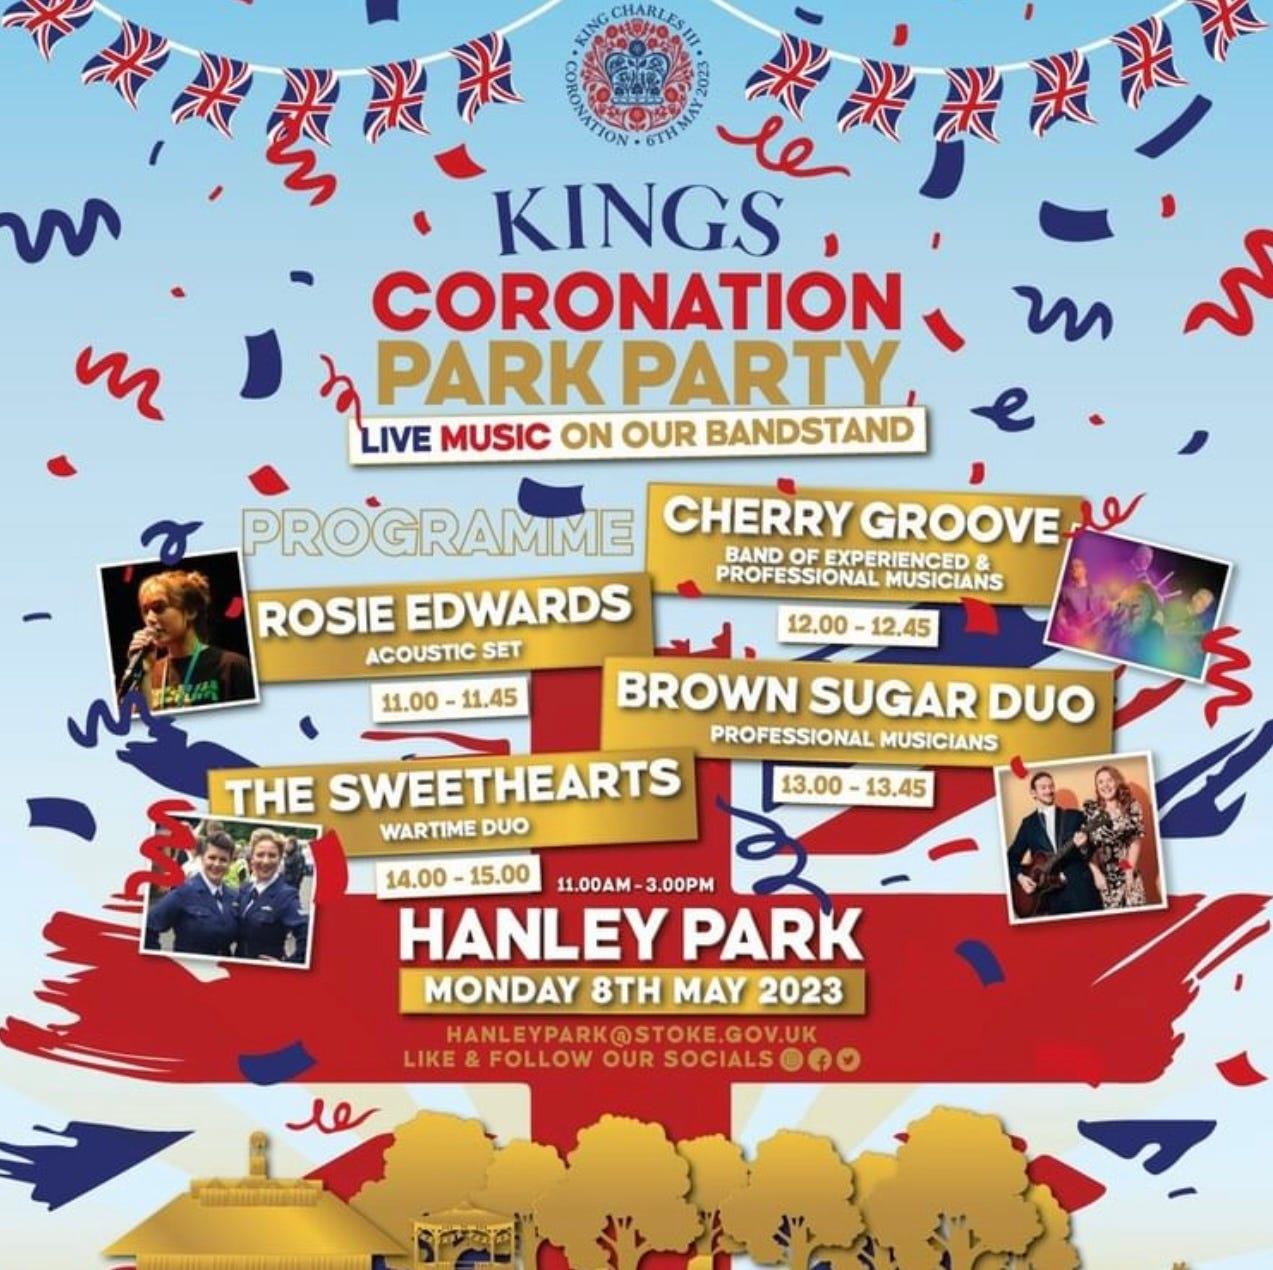 King's Coronation Park Party, Hanley